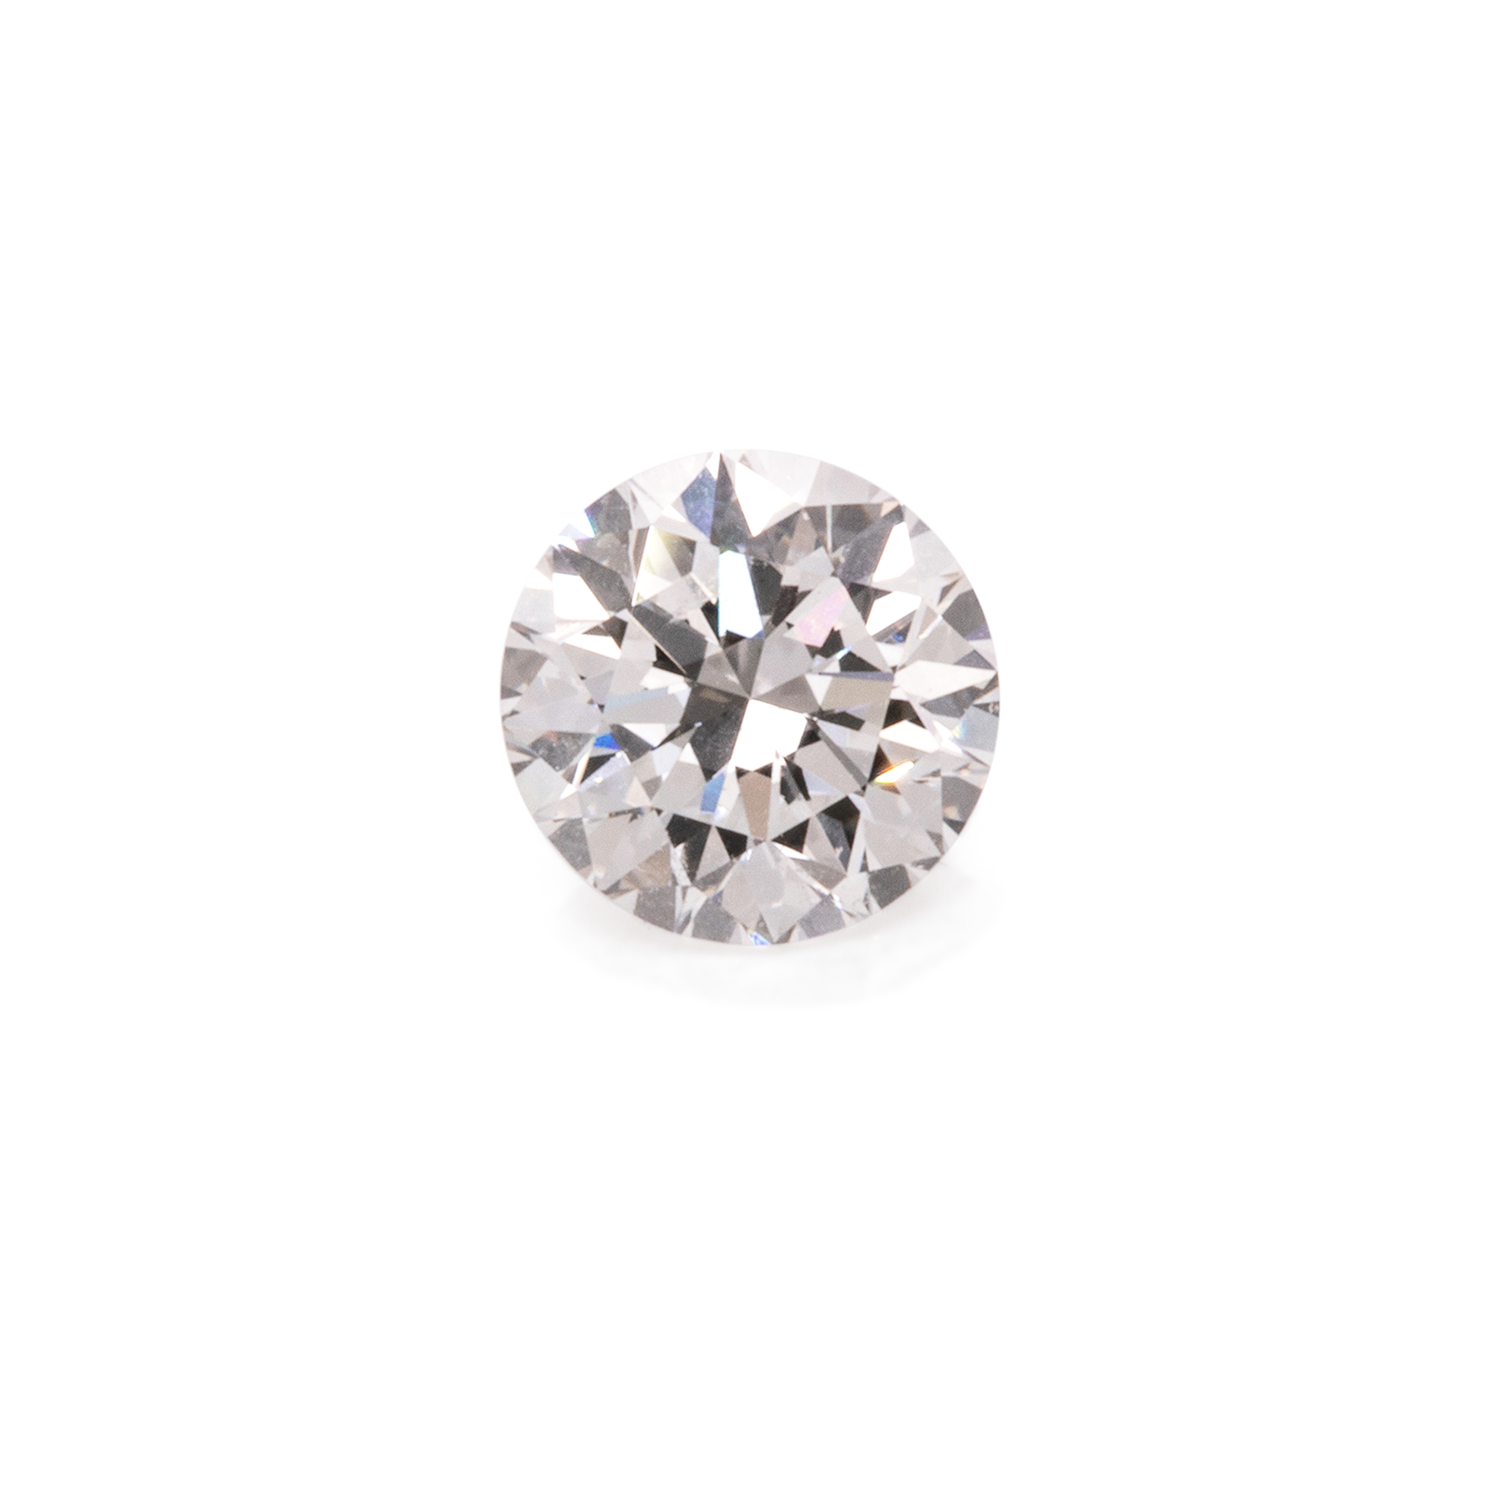 Diamond - white (D), IF, round, 4.0mm, 0.25 cts, No. D11067